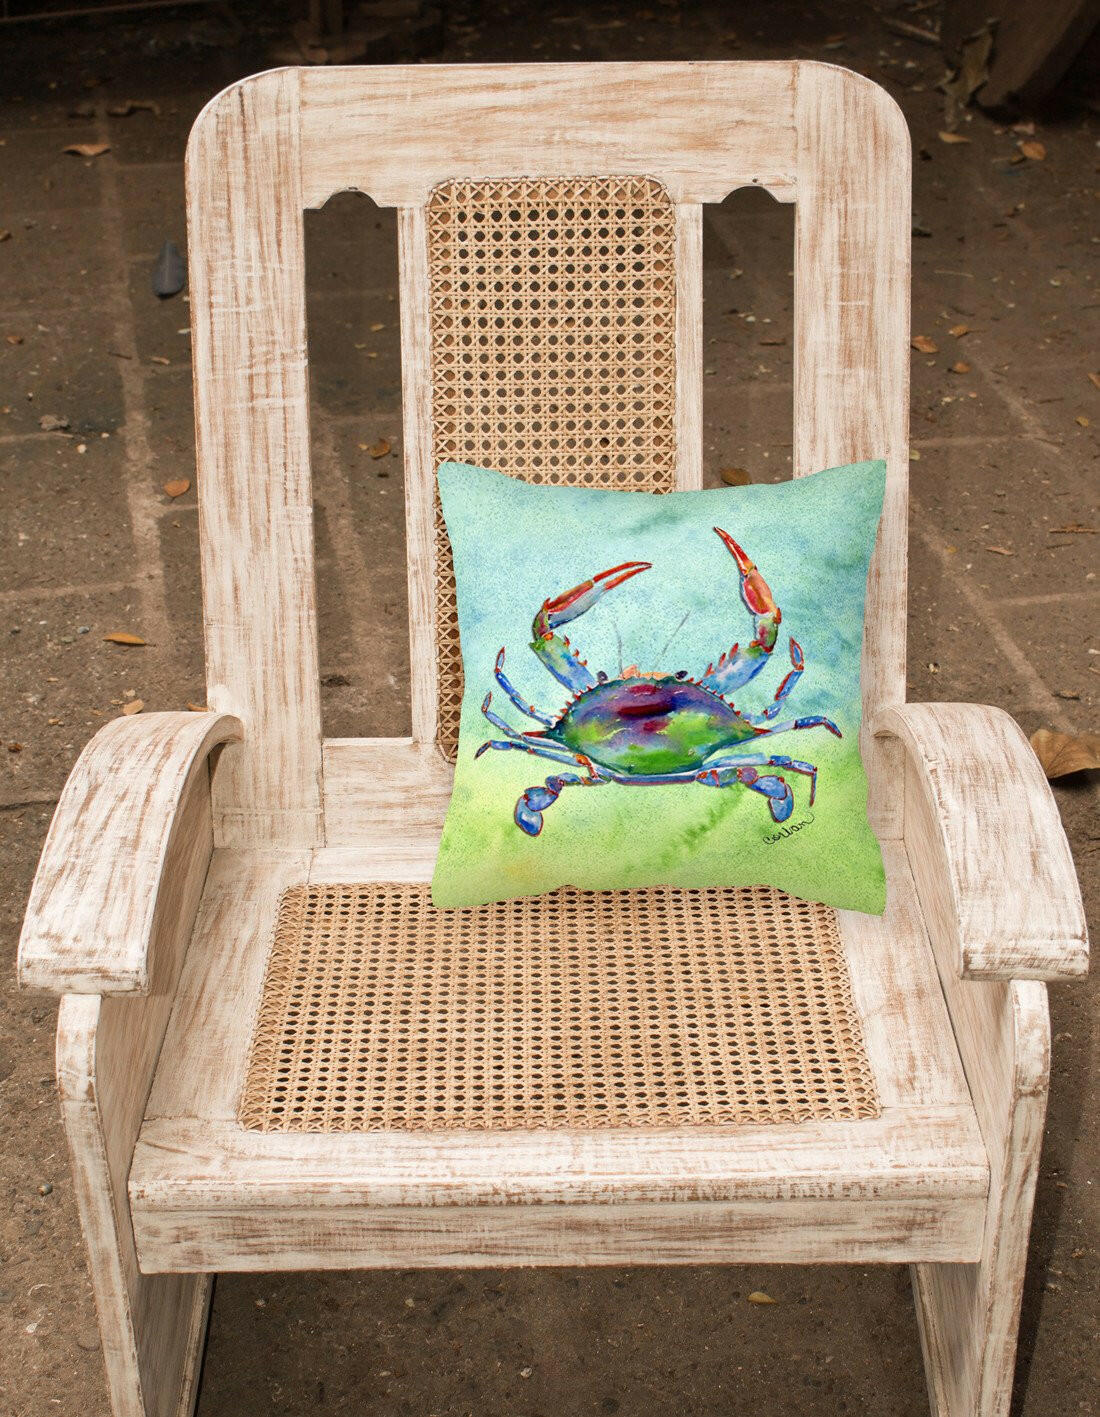 Crab Decorative   Canvas Fabric Pillow - the-store.com